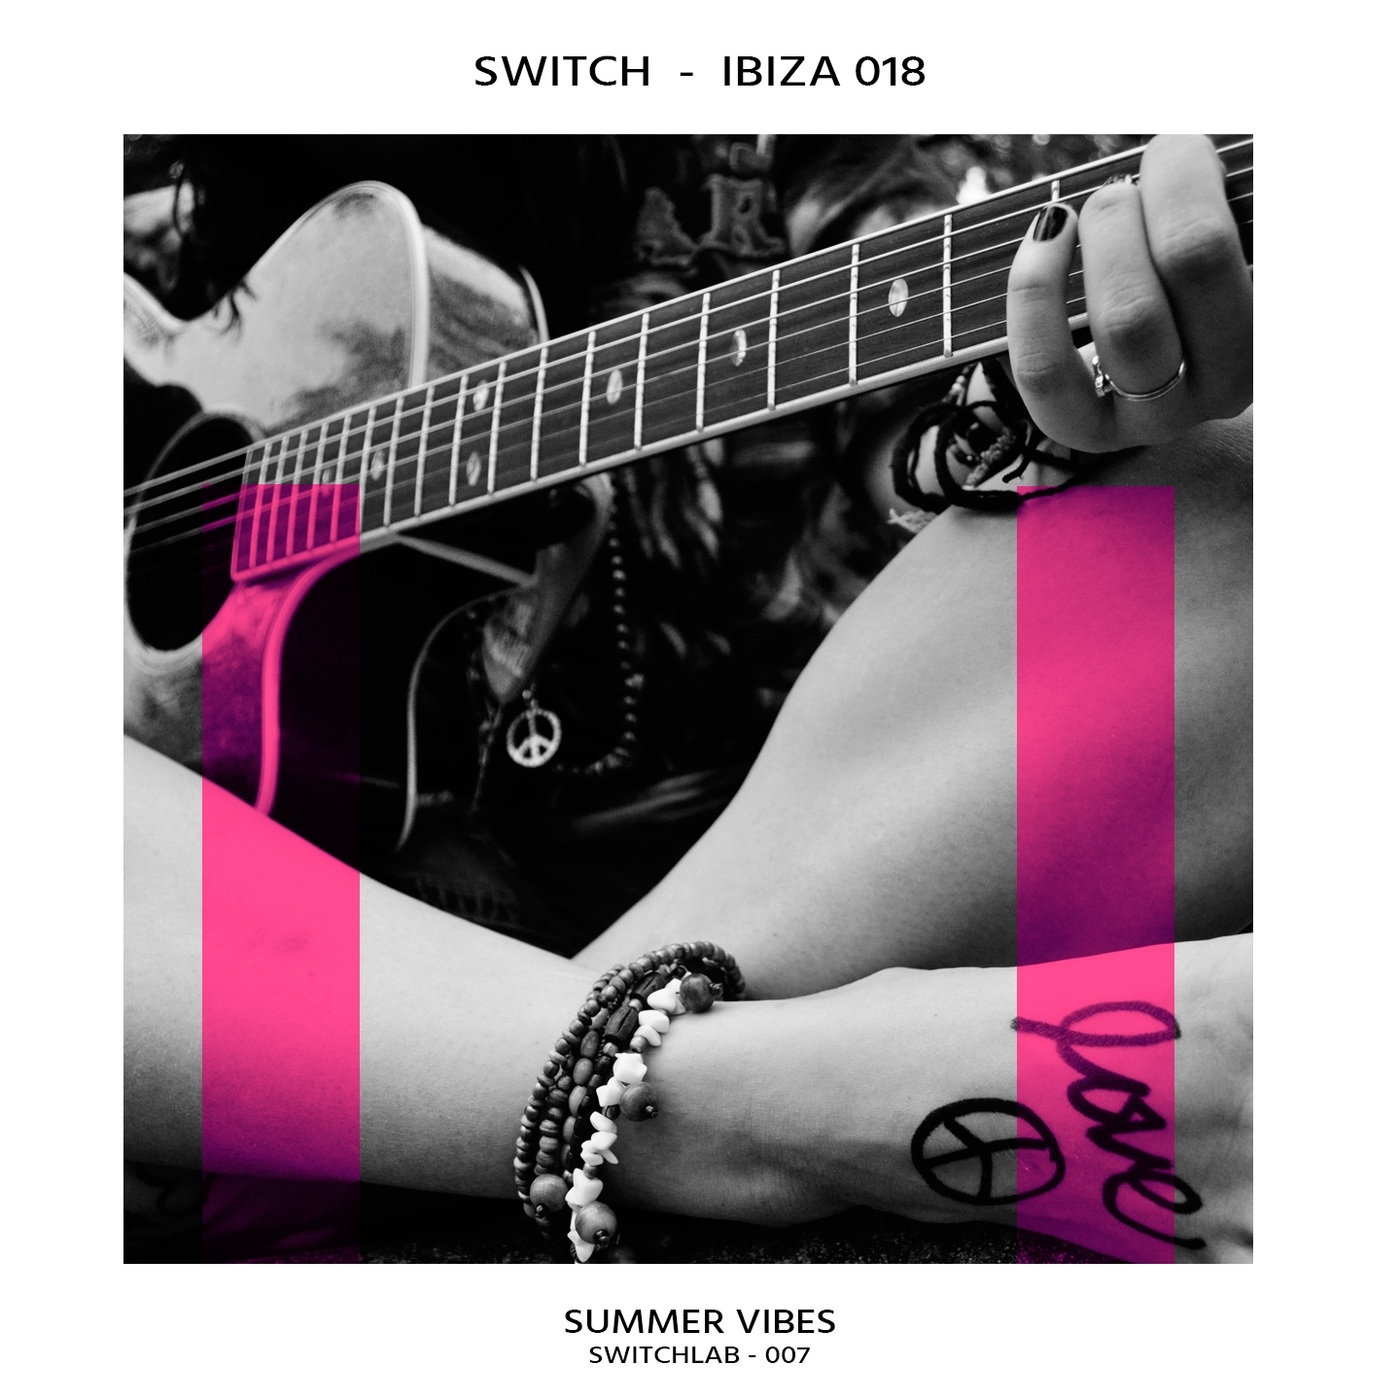 VA - Switch (Ibiza 018) / Switchlab